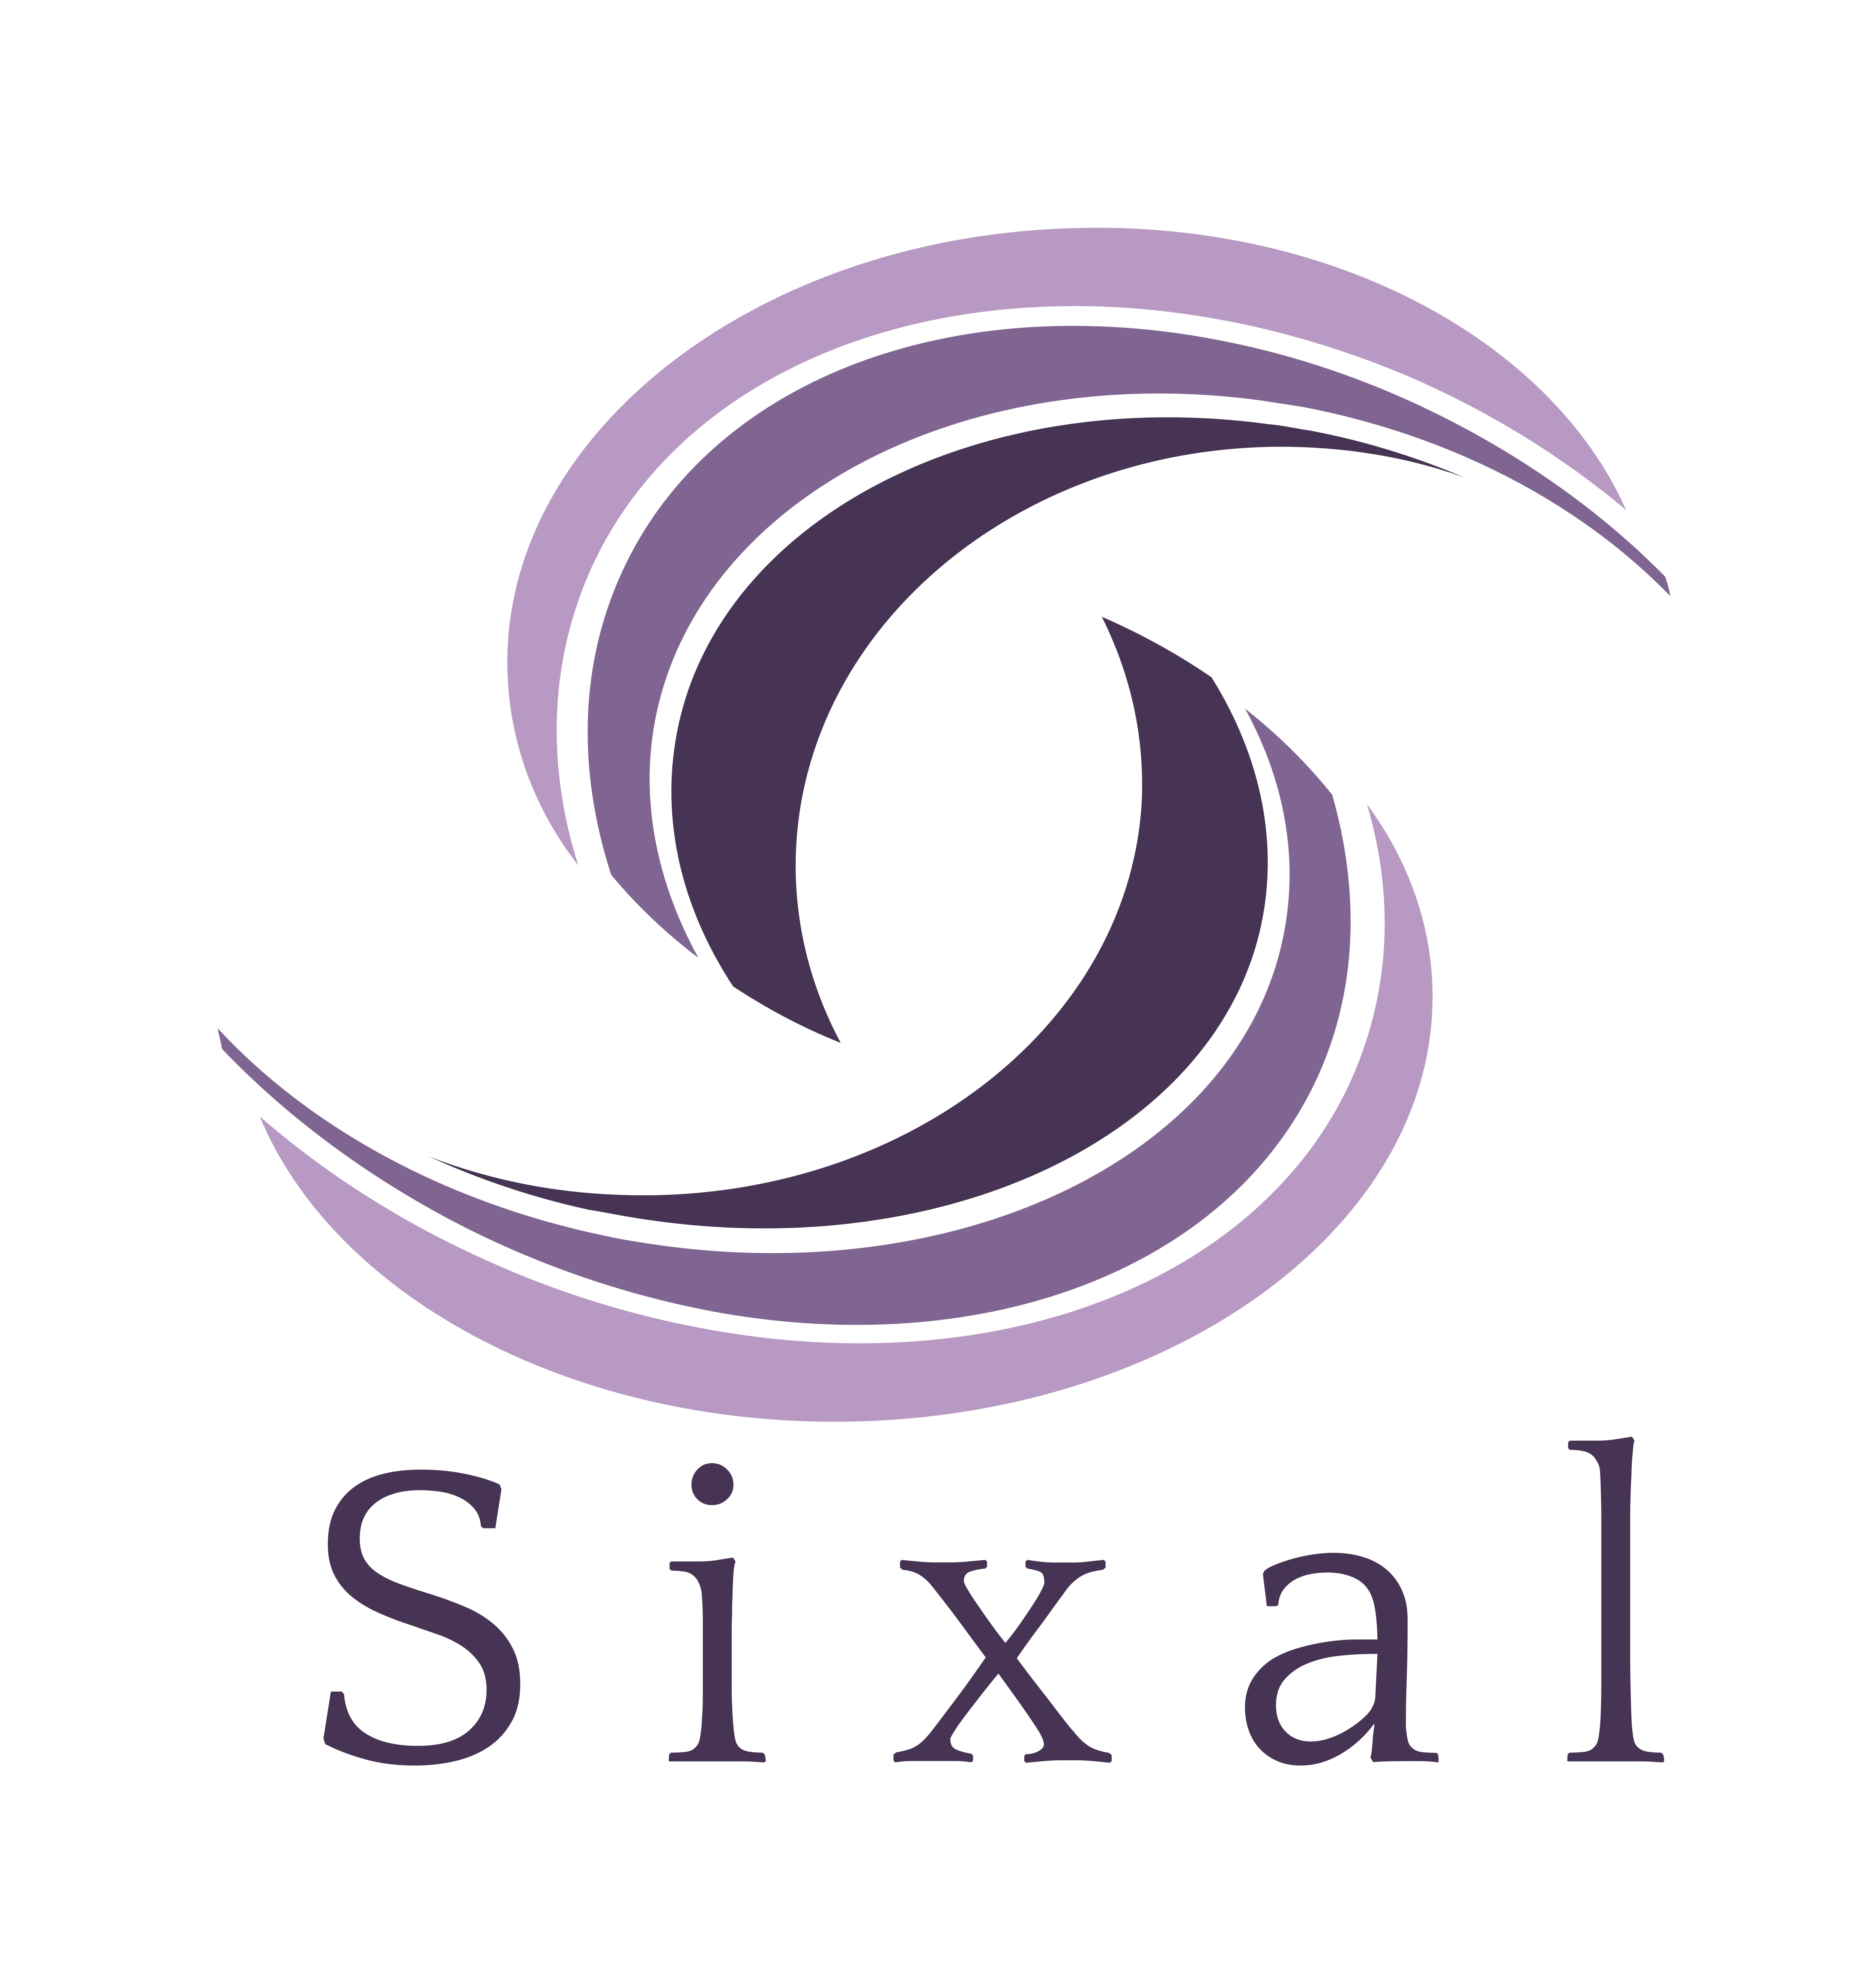 Sixal logo.jpg